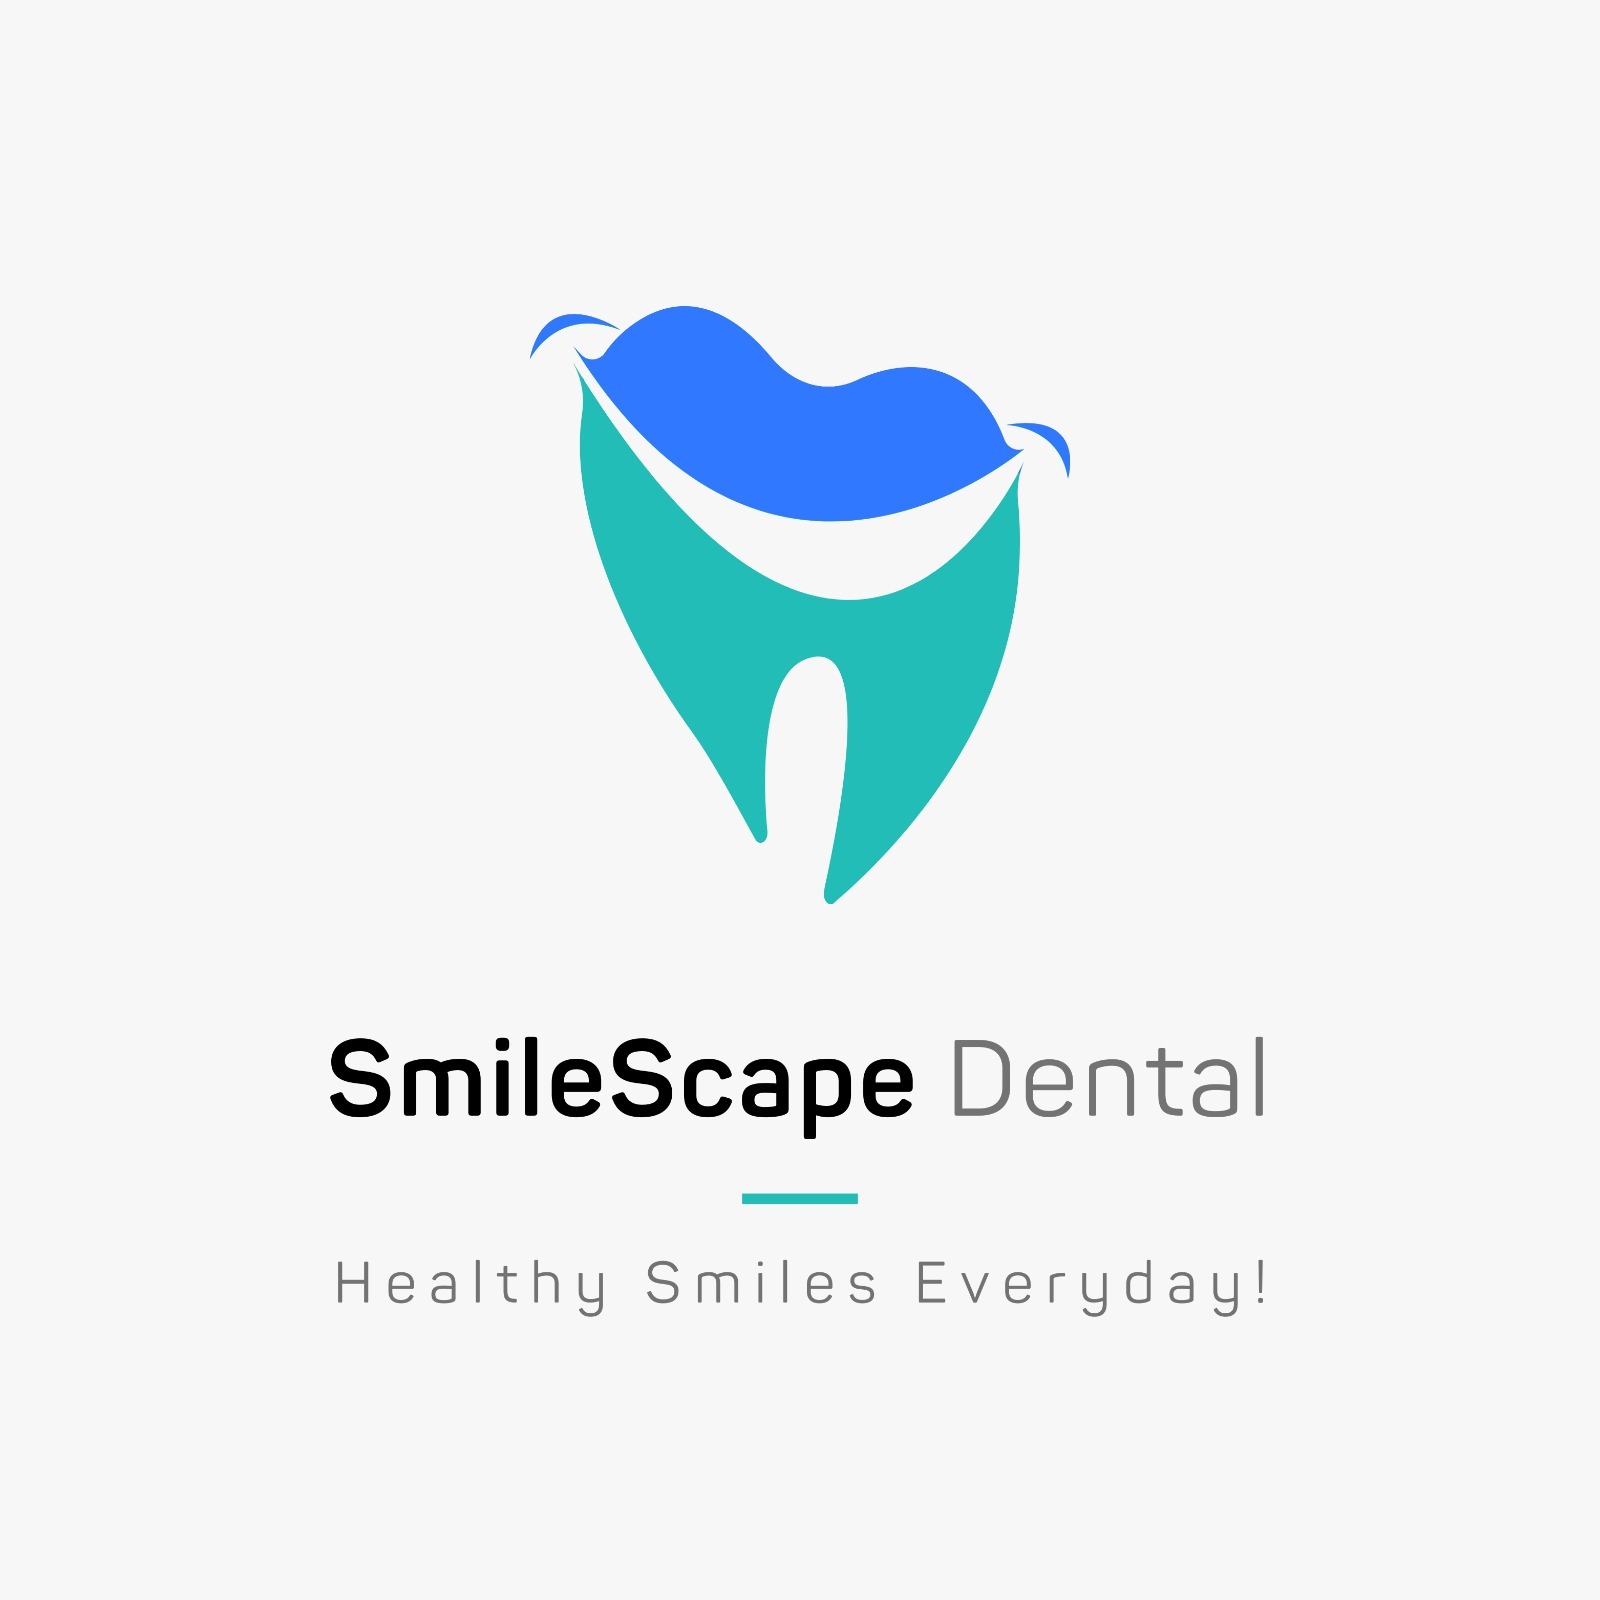 SmileScape Dental|Healthcare|Medical Services